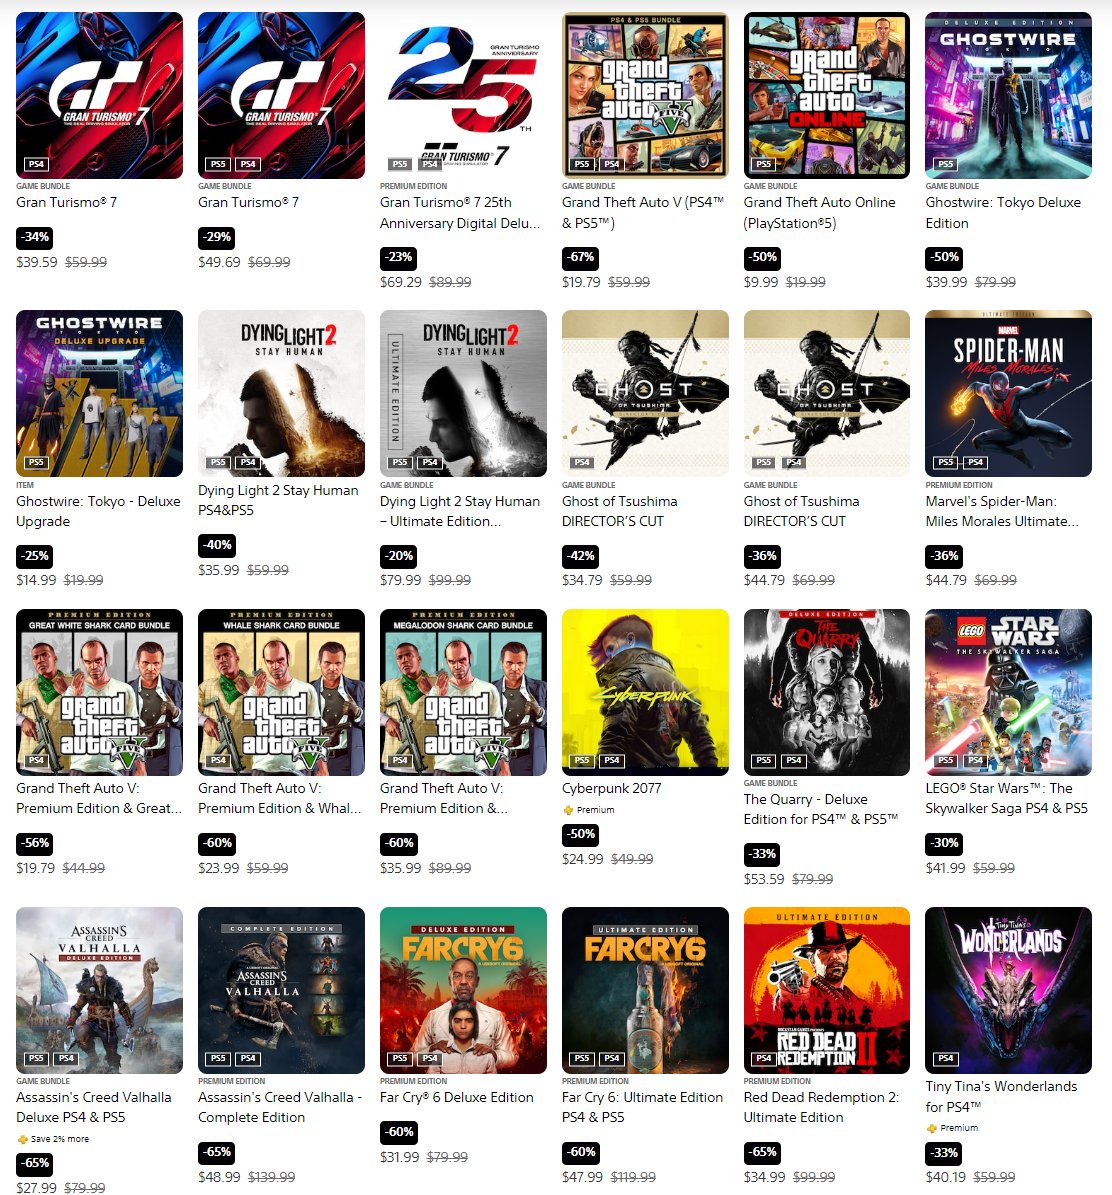 RT @Wario64: Blockbuster games sale on US PSN https://t.co/dBhADRlpx4
Games under $20 sale https://t.co/8s7SHpIz7A https://t.co/CqhfLCd4Ta